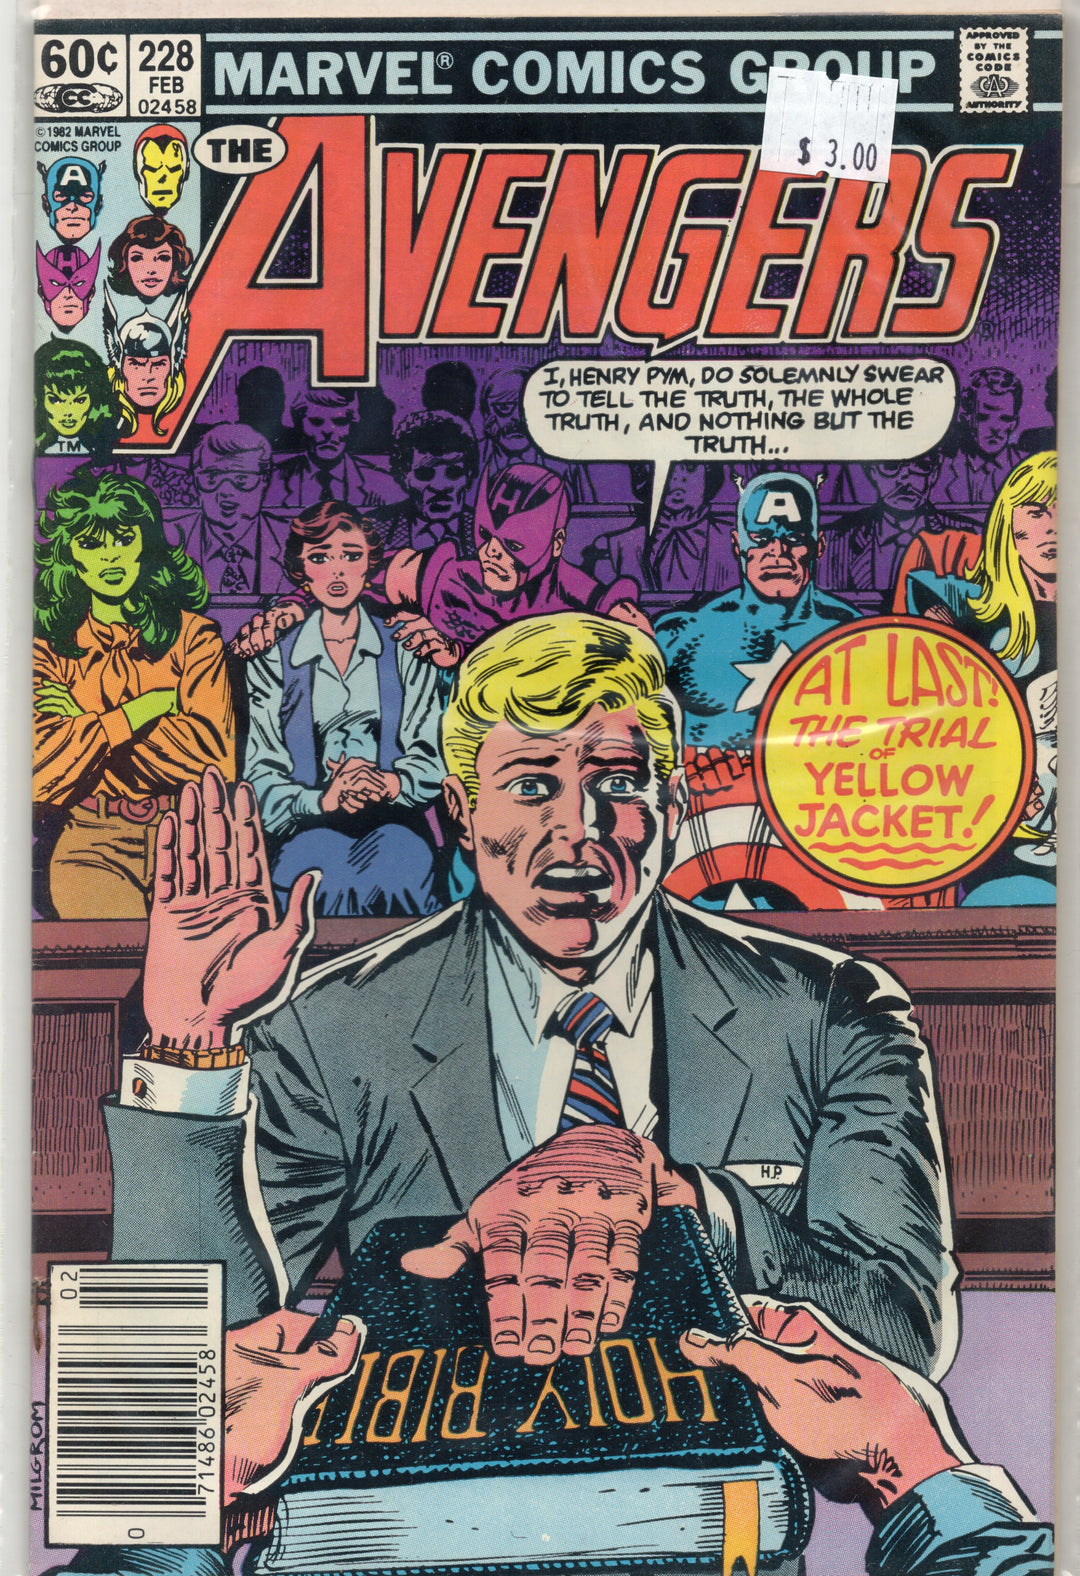 The Avengers #228